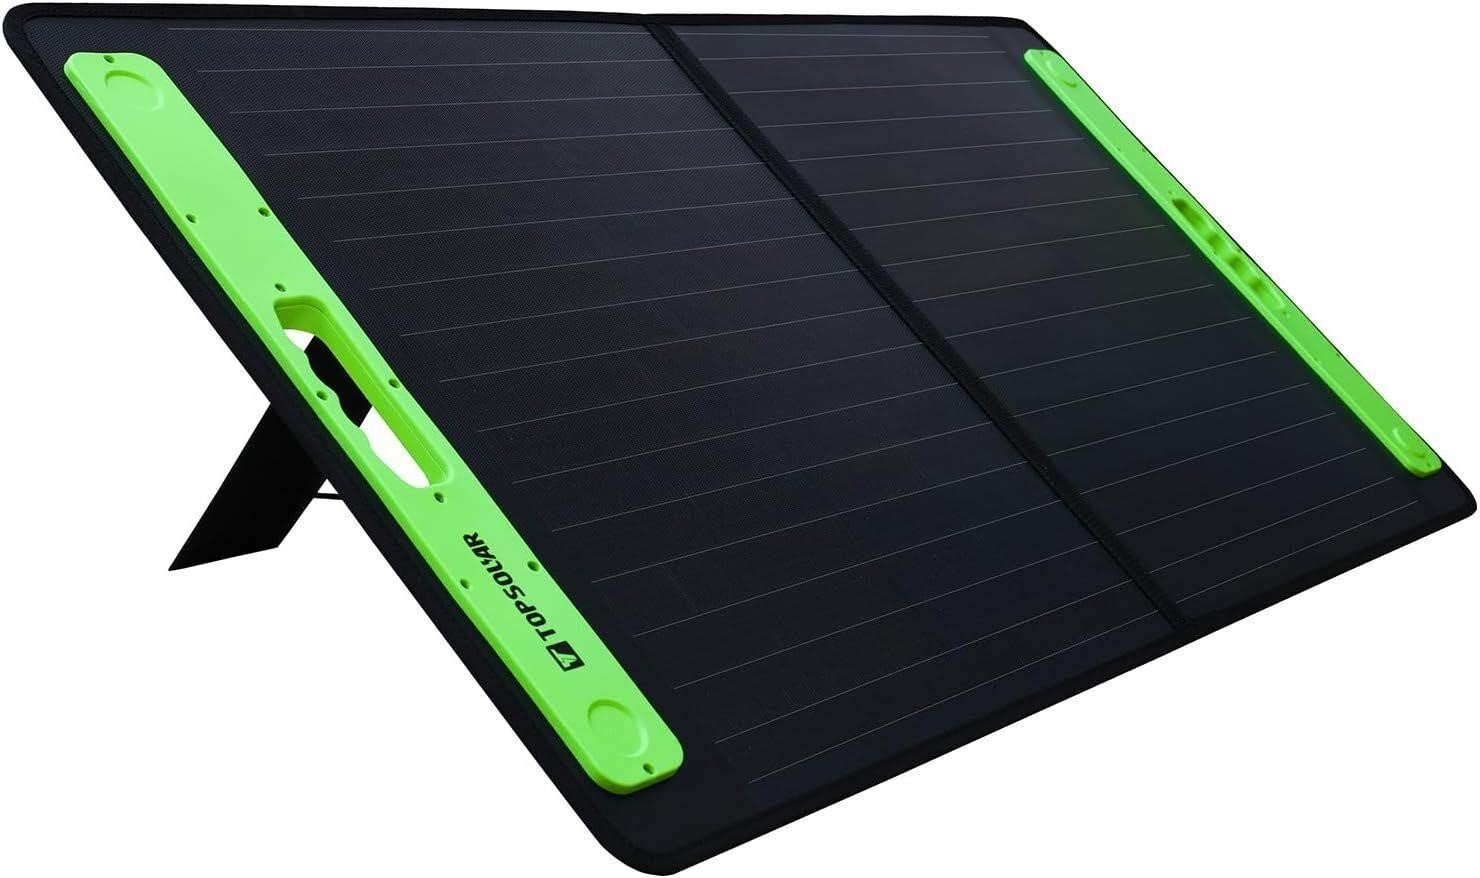 Topsolar 100W Portable Solar Panel Charger